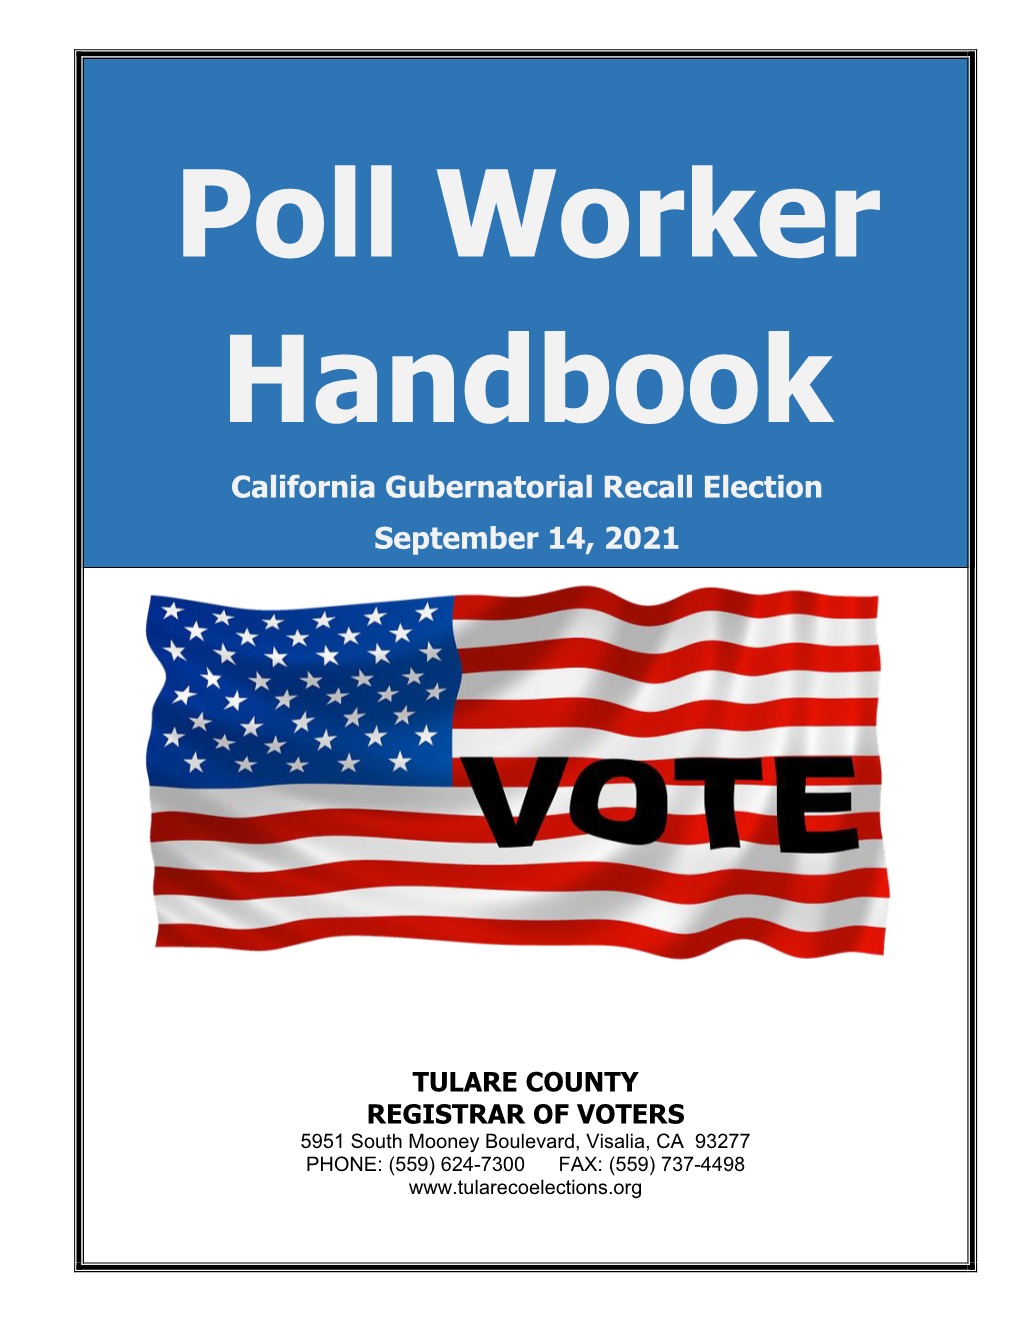 California Gubernatorial Recall Election September 14, 2021